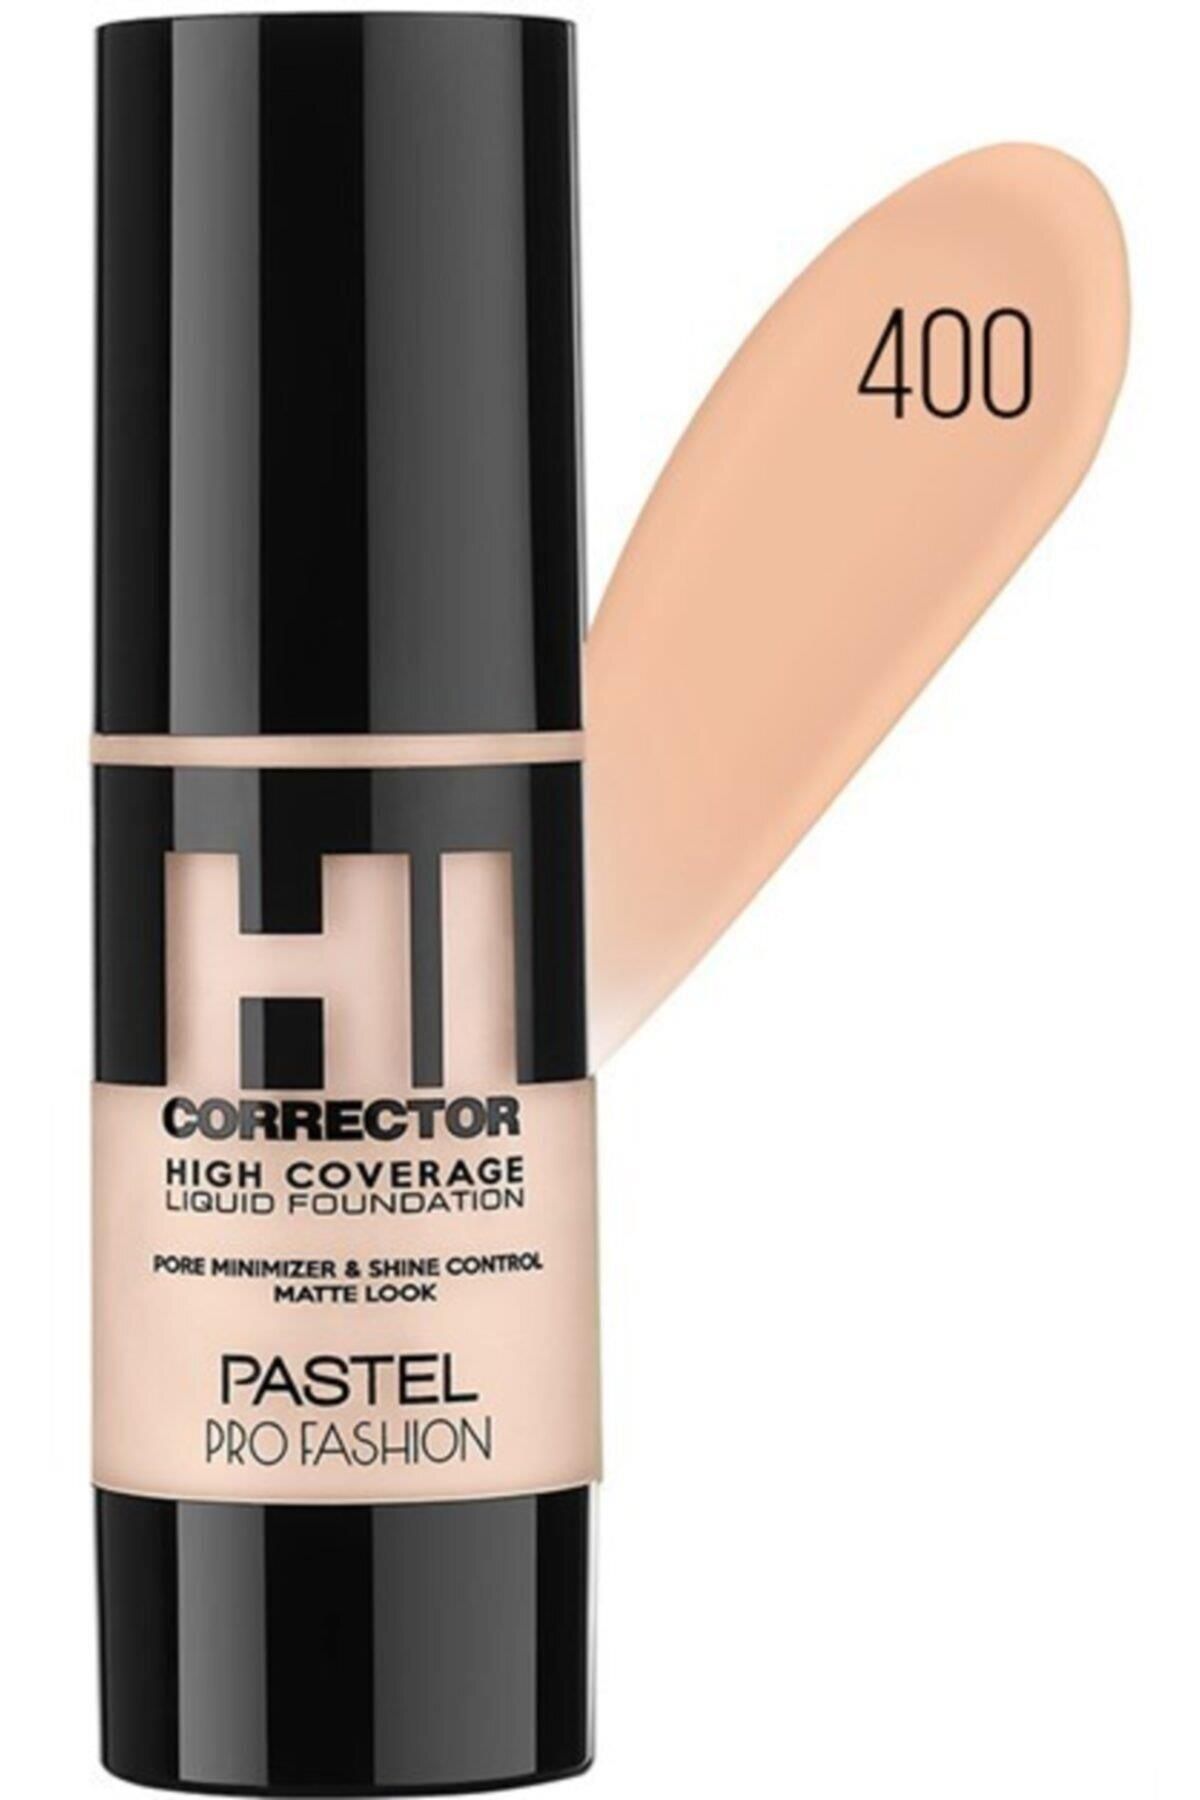 Pastel High Coverage Liquid Foundation - Likit Fondöten 400